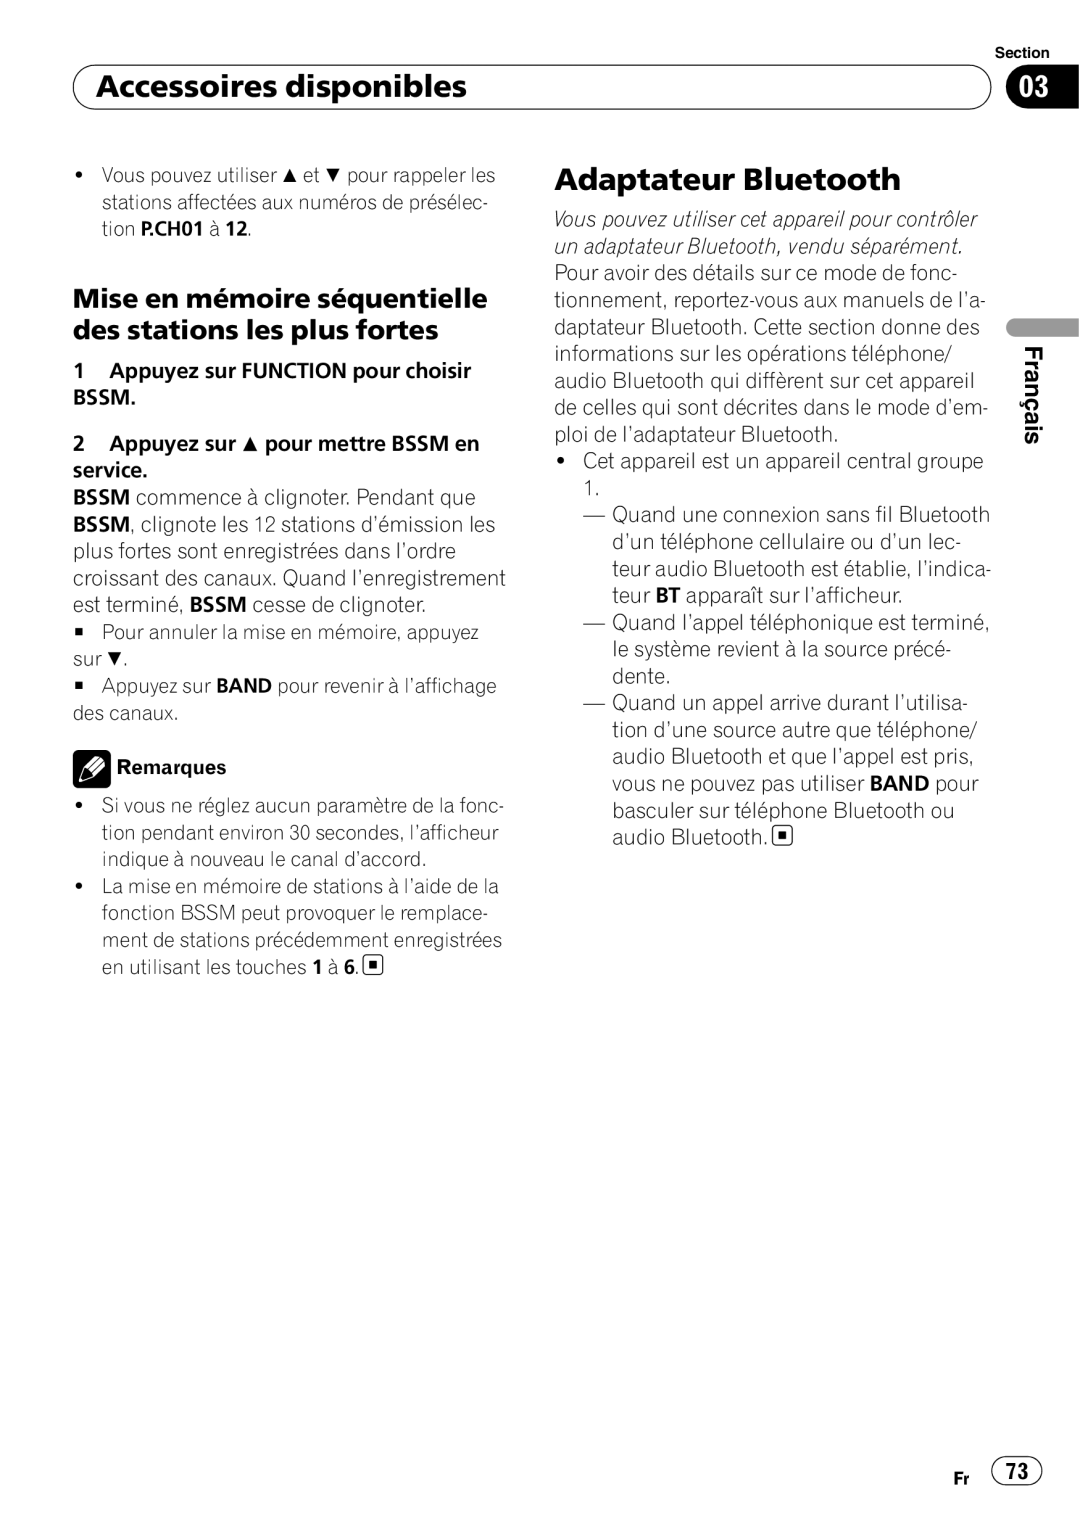 Pioneer SRC7127-B/N operation manual Adaptateur Bluetooth, Accessoires disponibles, Français 